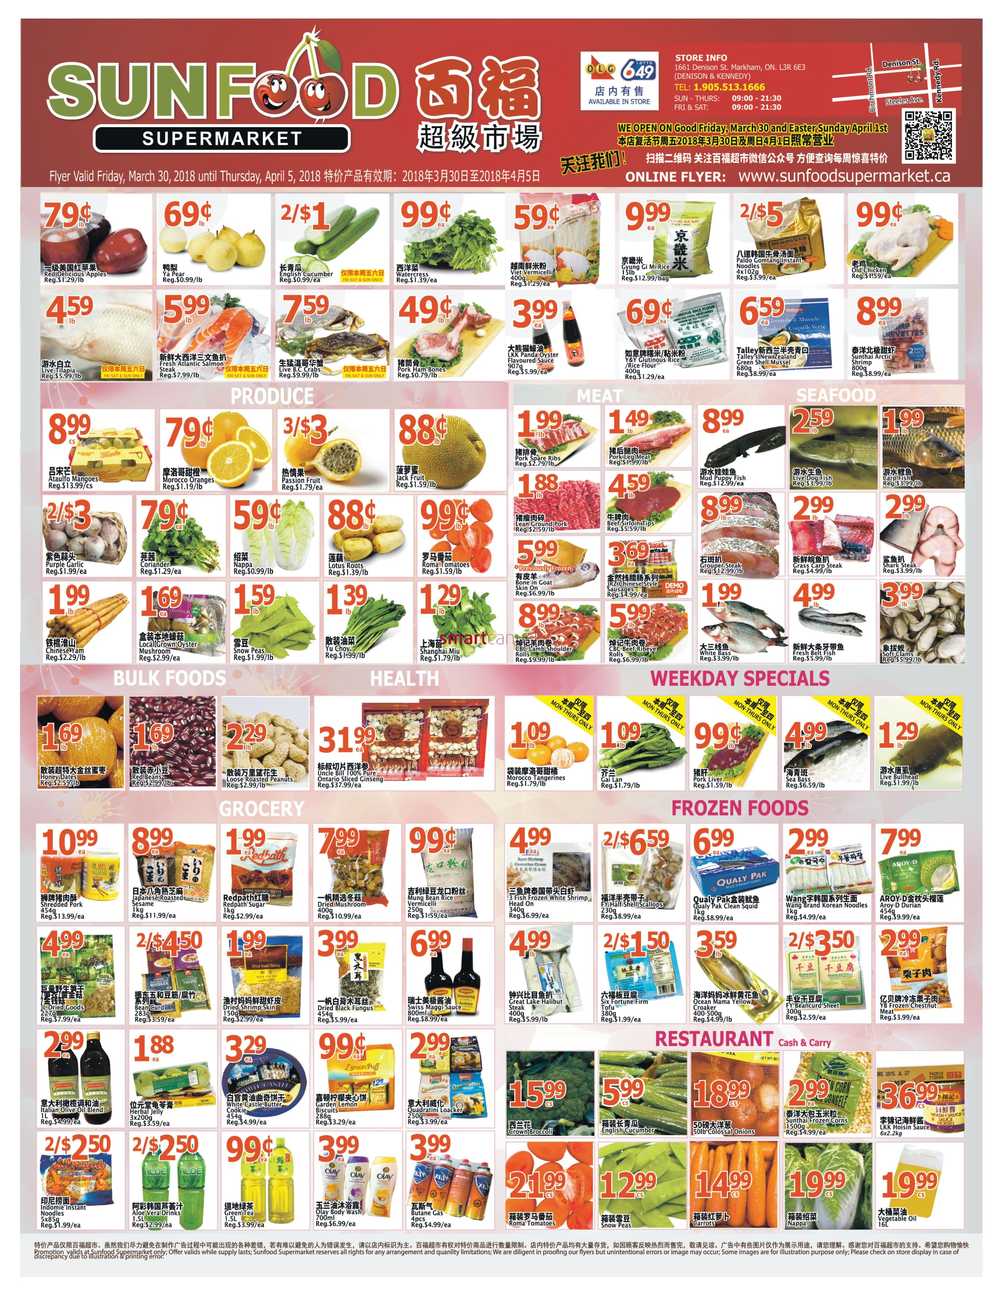 Sunfood Supermarket Flyer March 30 to April 5